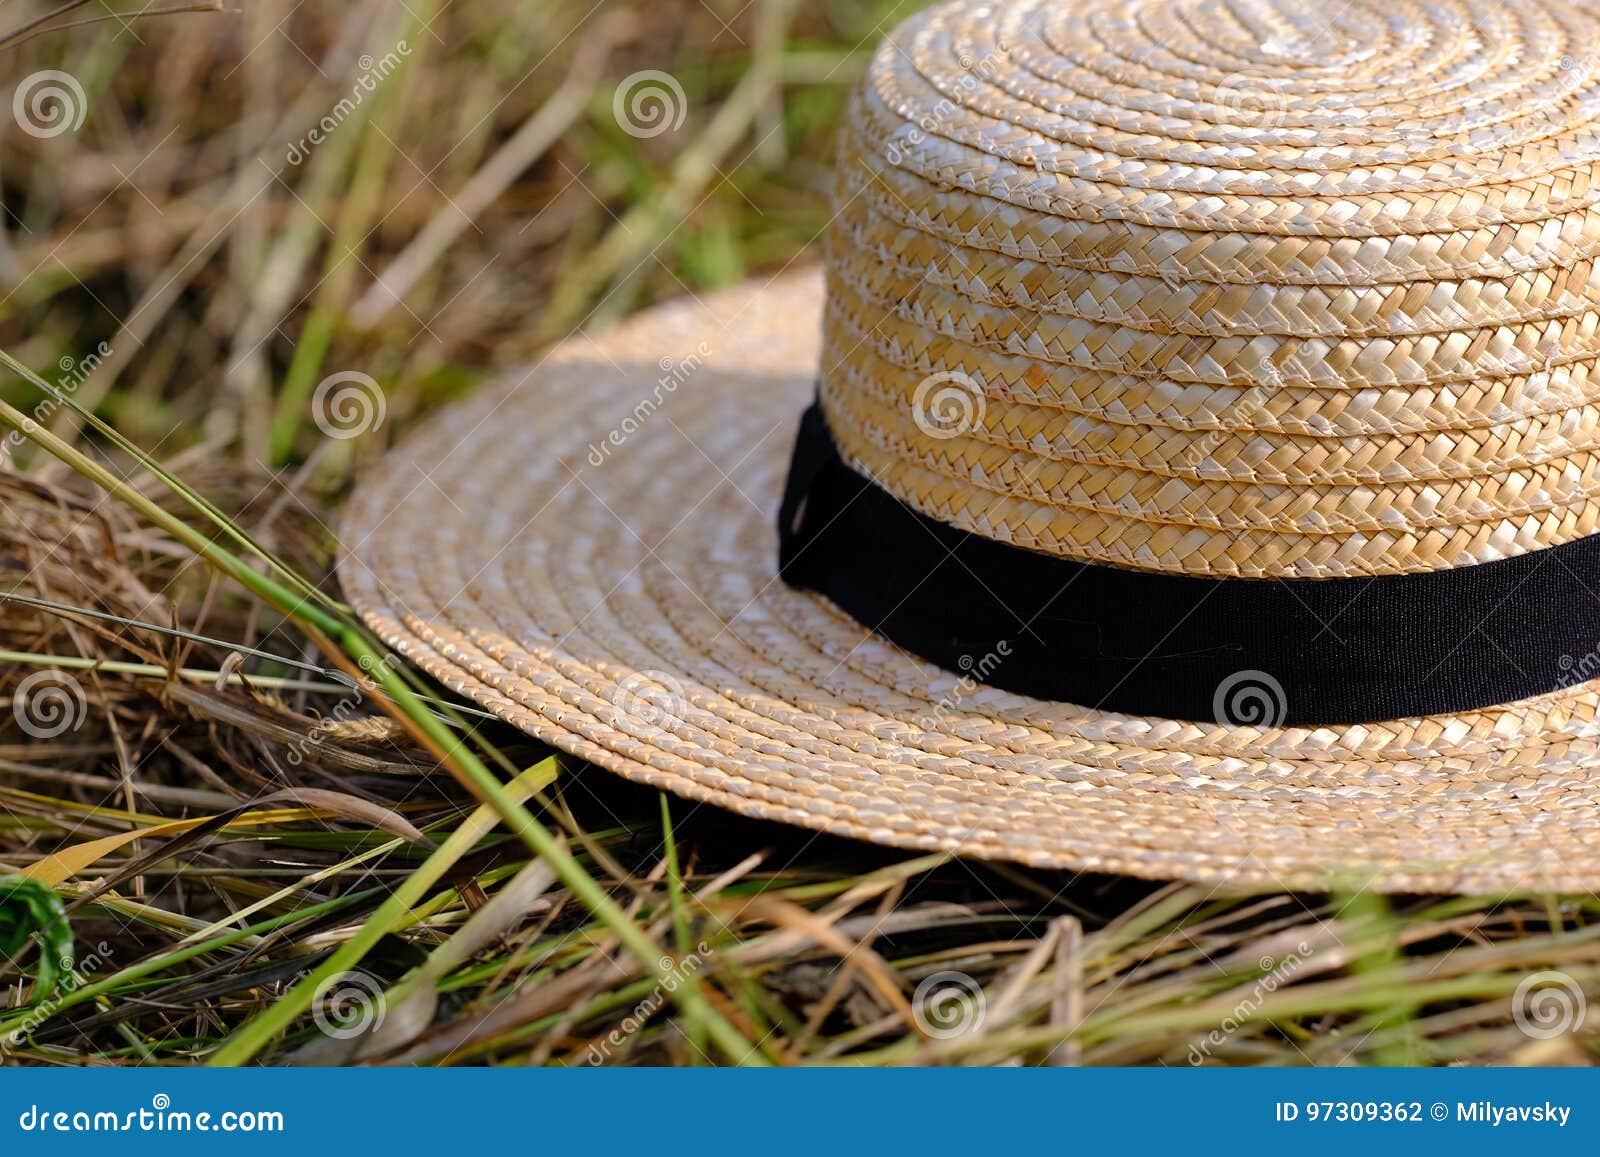 Wicker hat, hay, farm stock photo. Image of comfort, good - 97309362